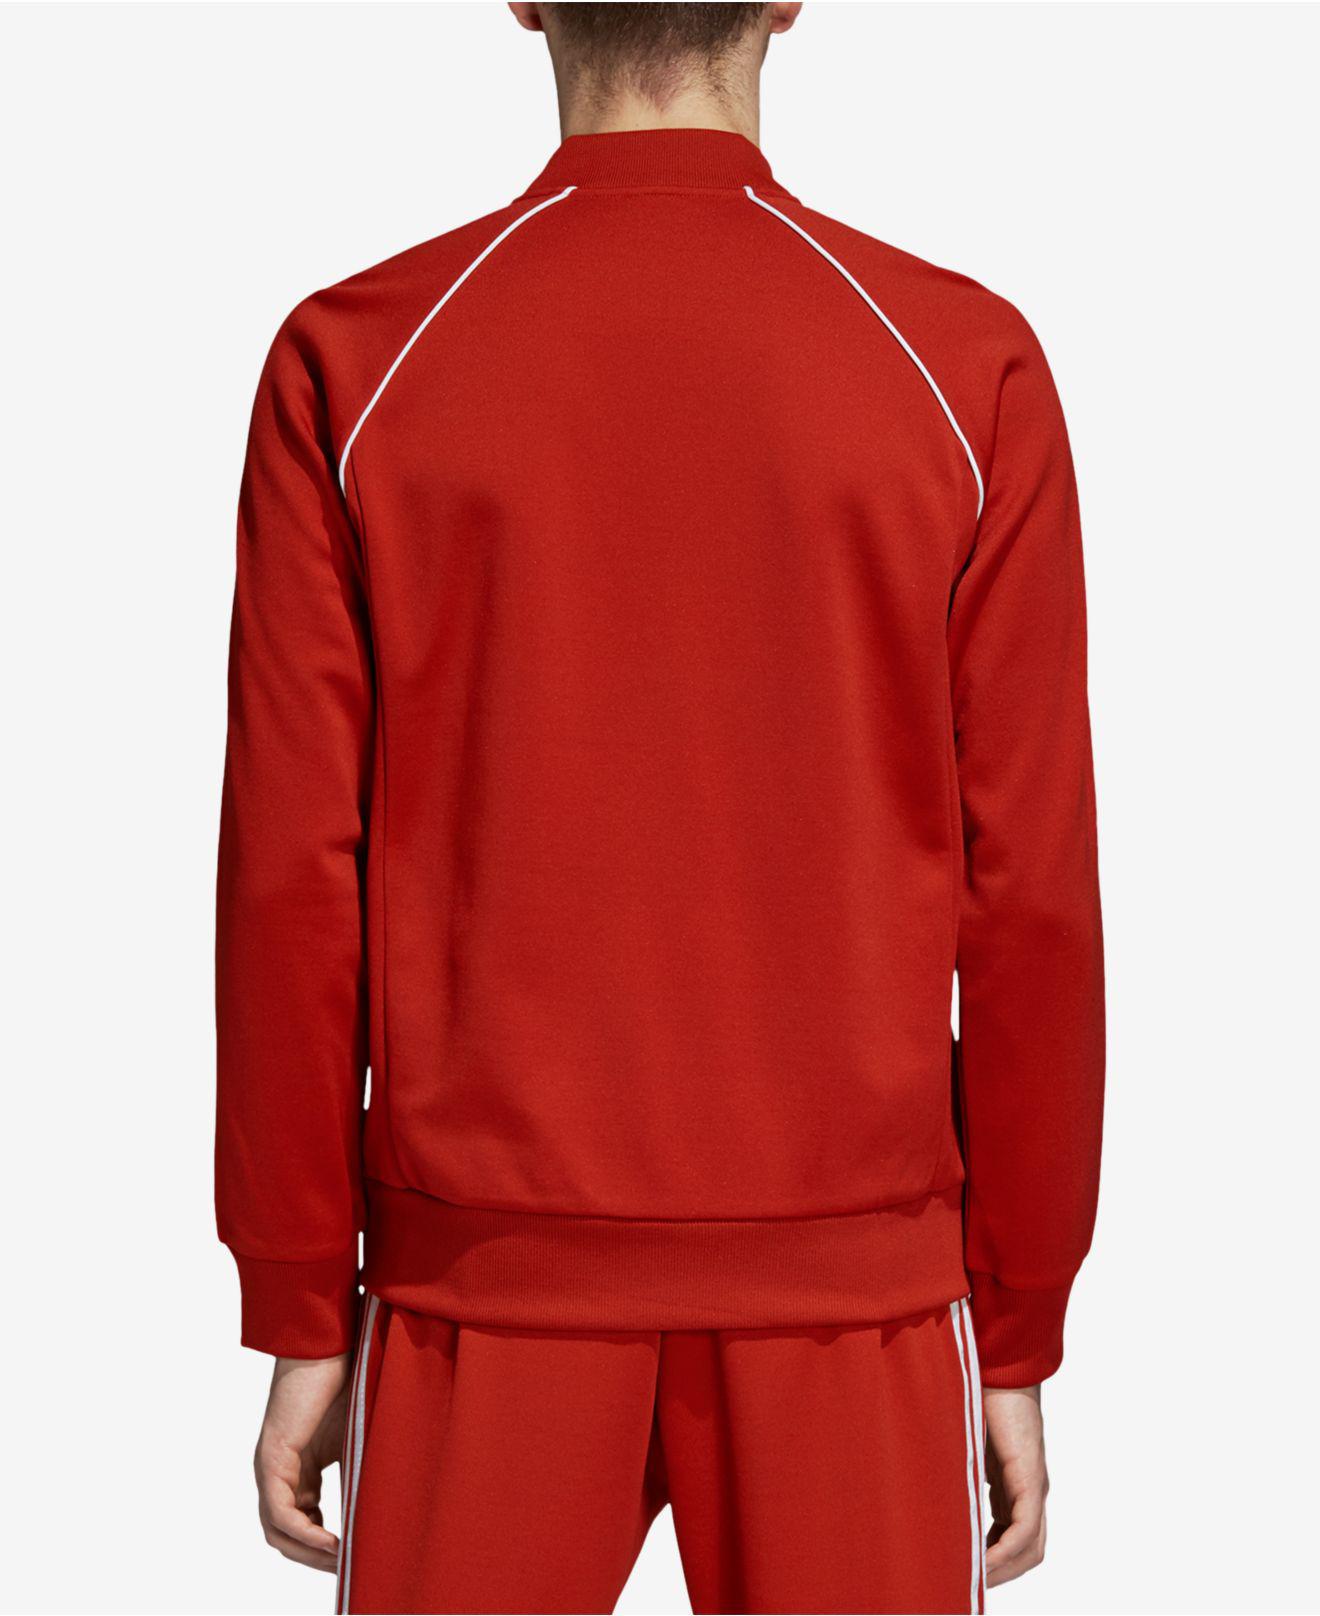 Lyst - Adidas Originals Adicolor Superstar Track Jacket in Red for Men